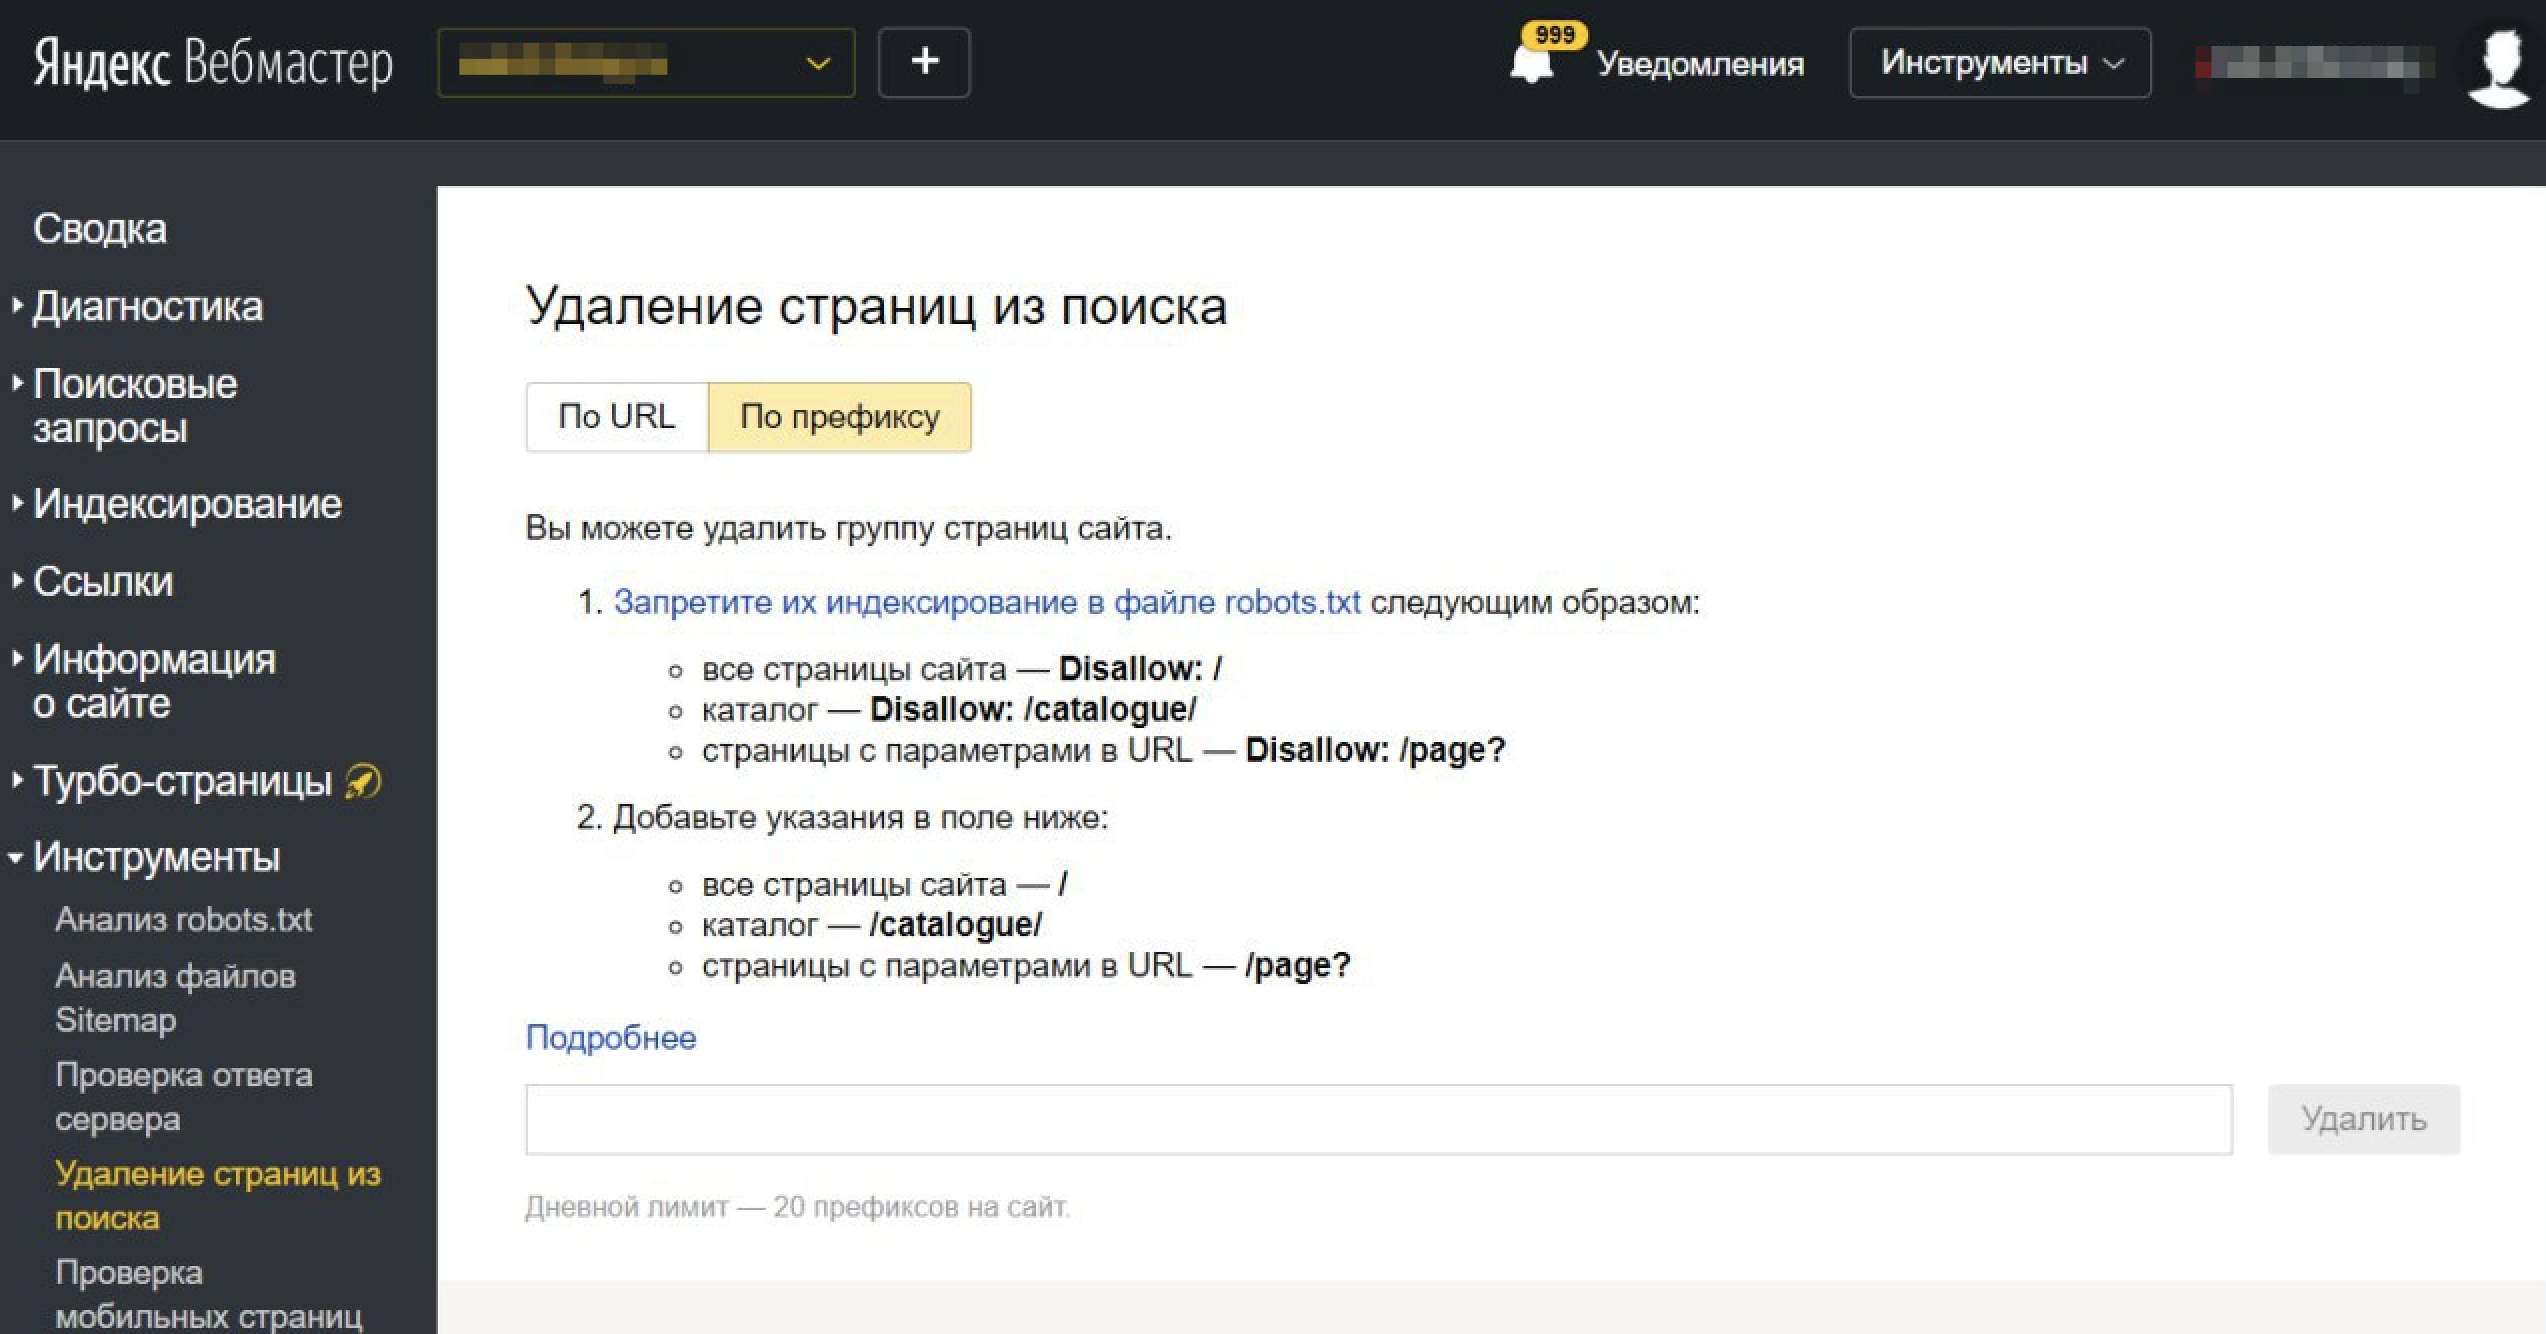 Удаление Фото Из Поиска Яндекс